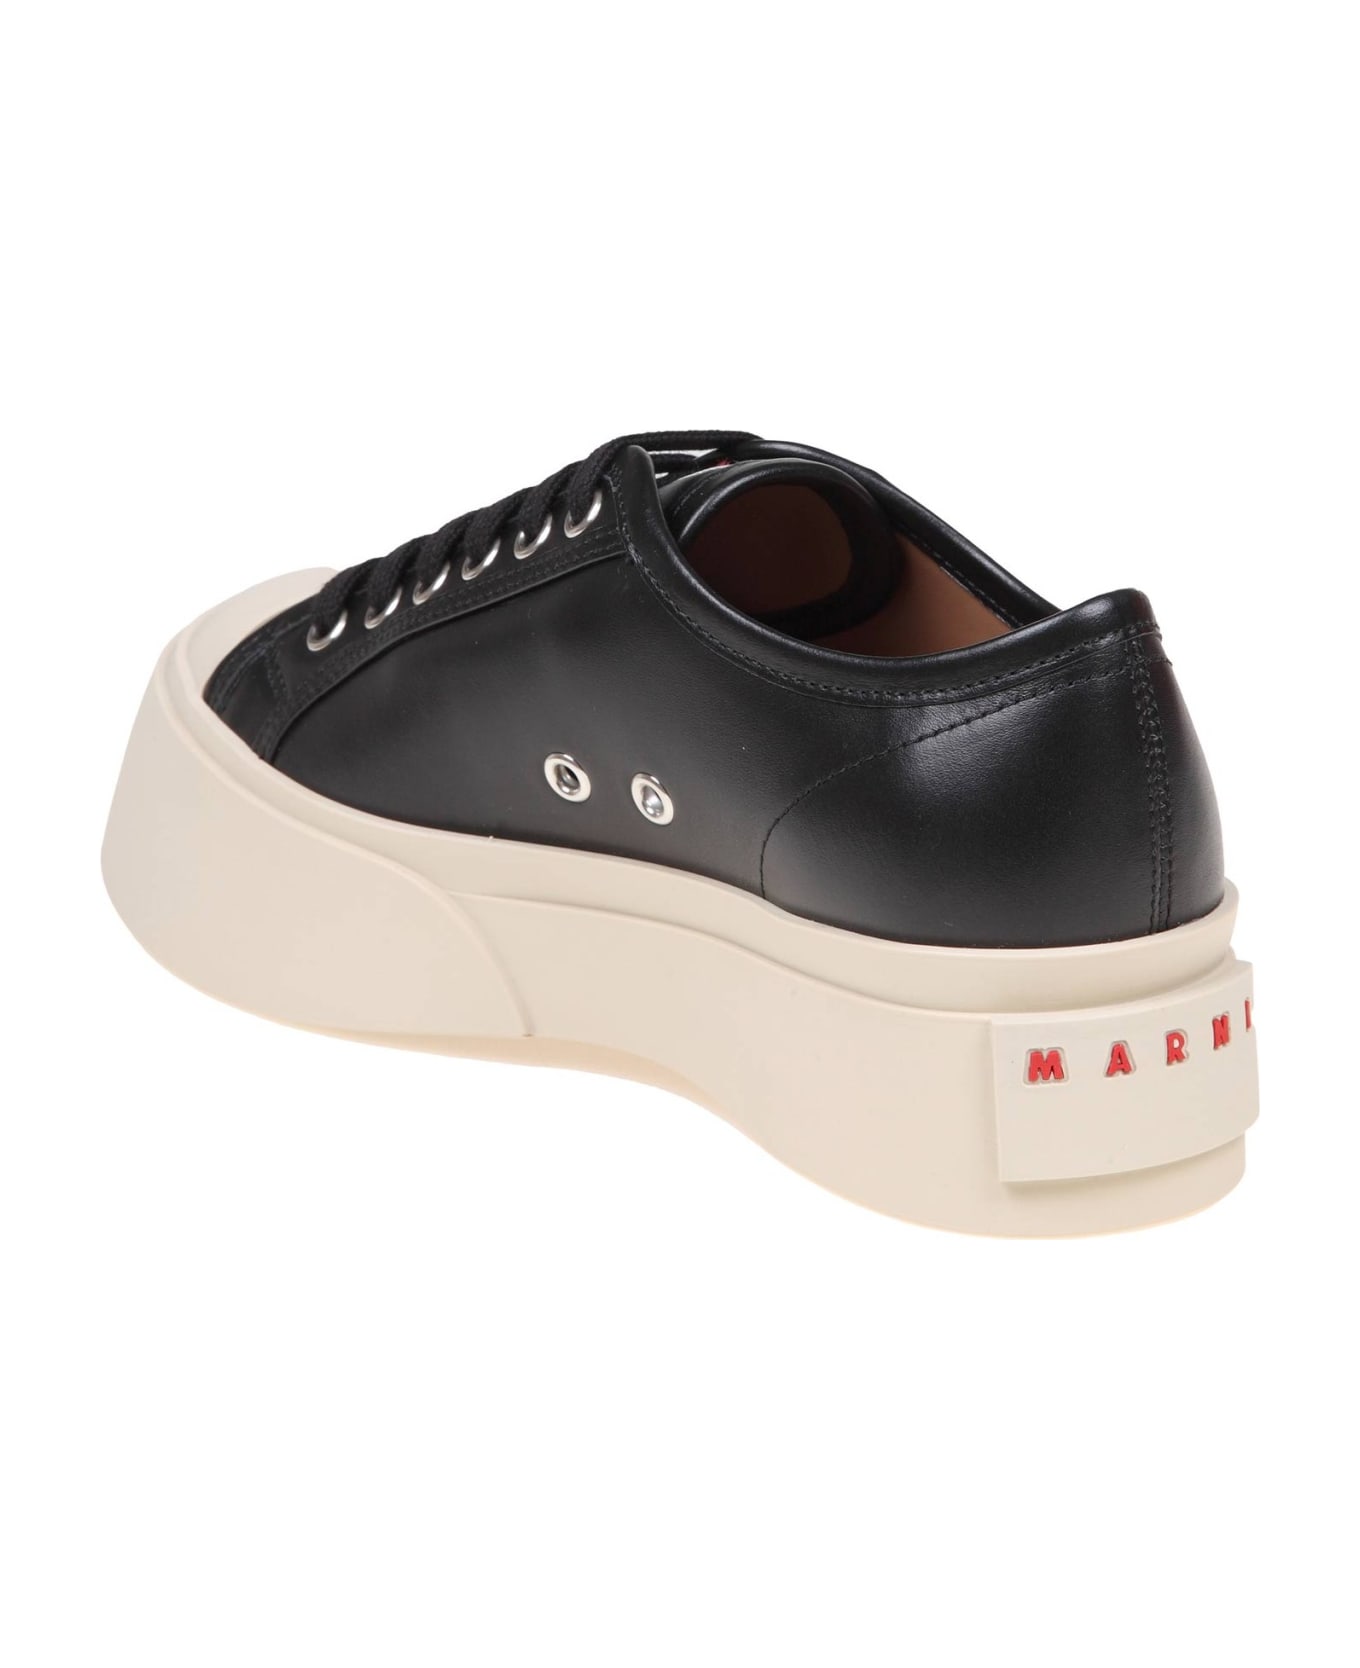 Marni Pablo Sneakers In Black Nappa - Black